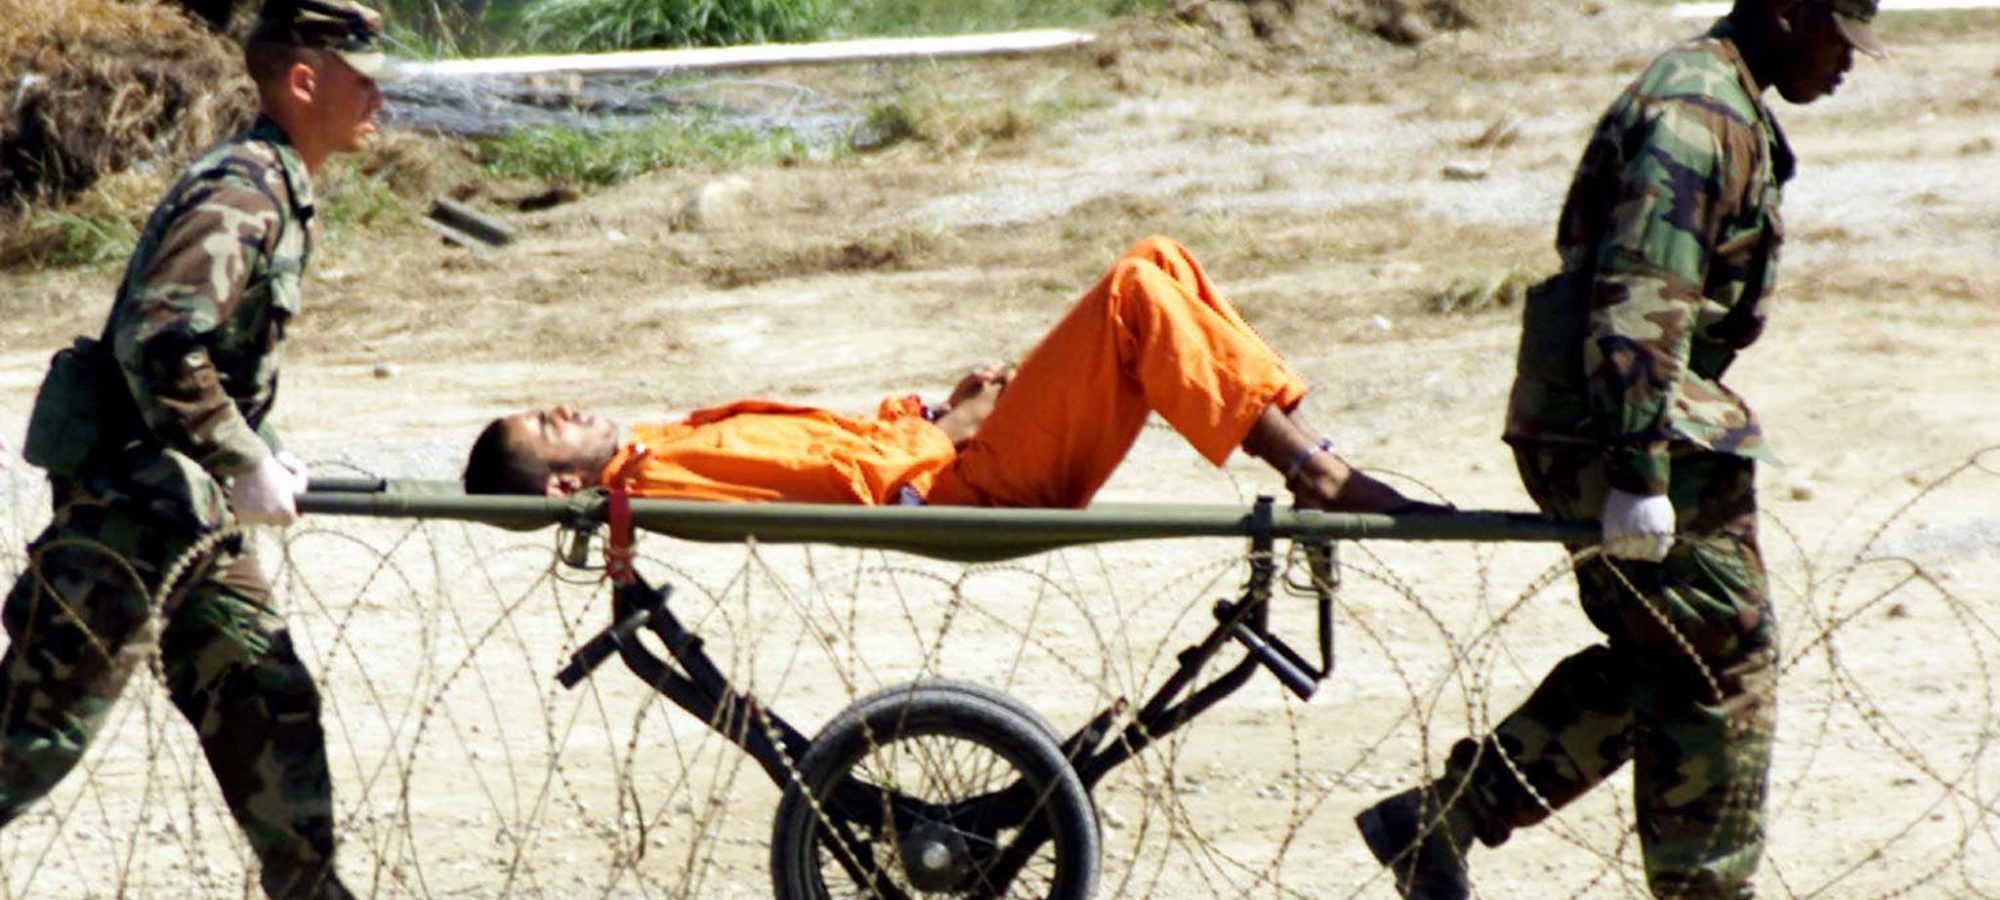 Guantanamo bay detainee torture